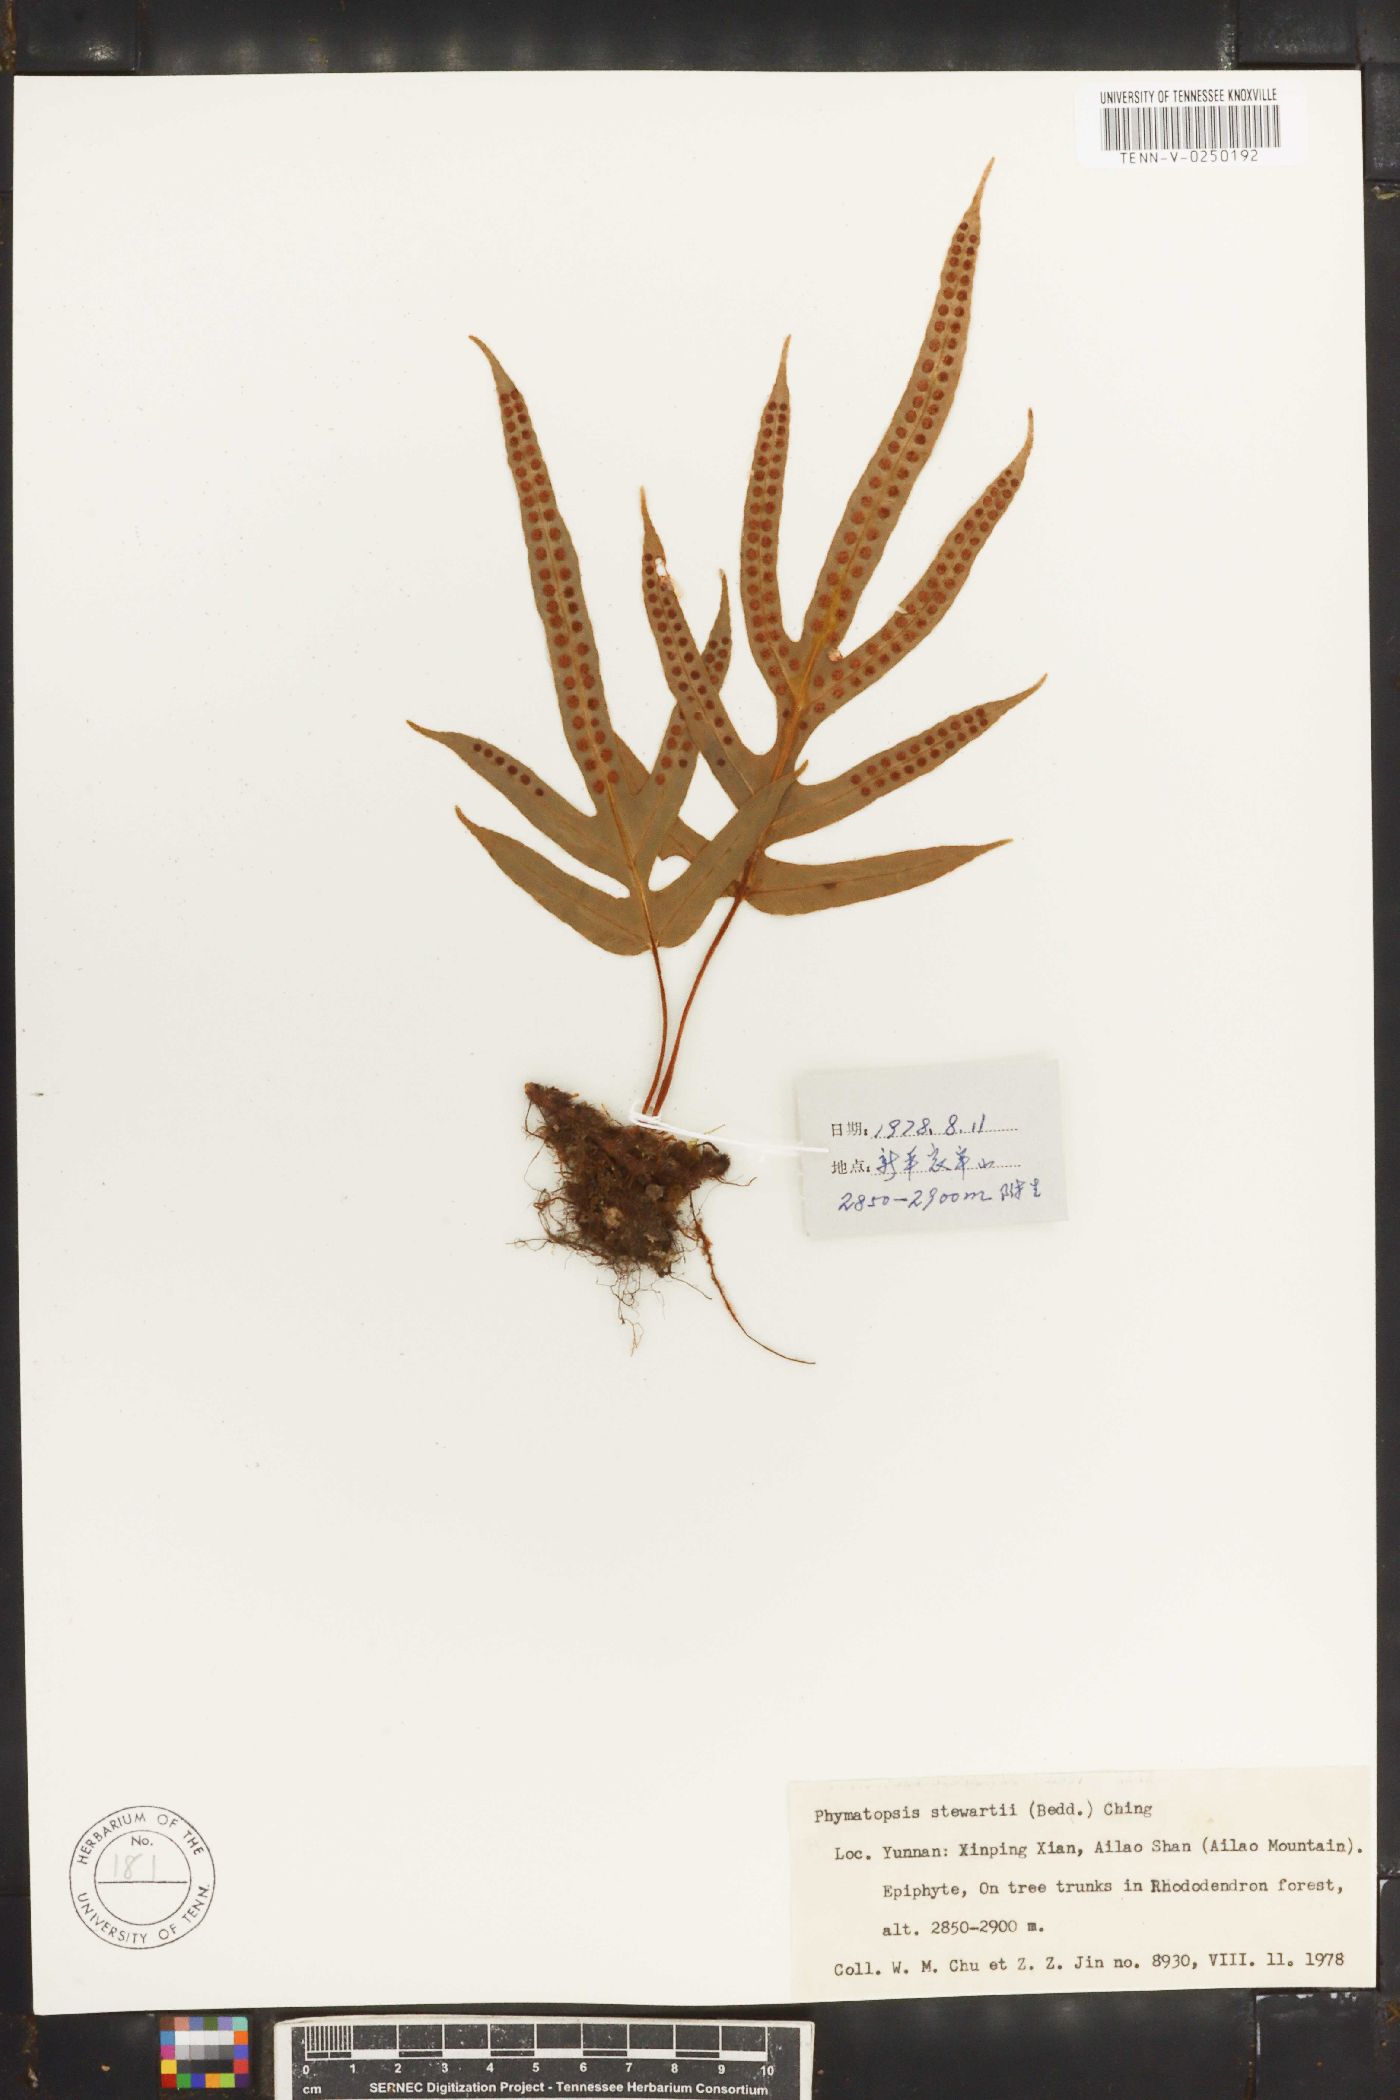 Phymatopsis image